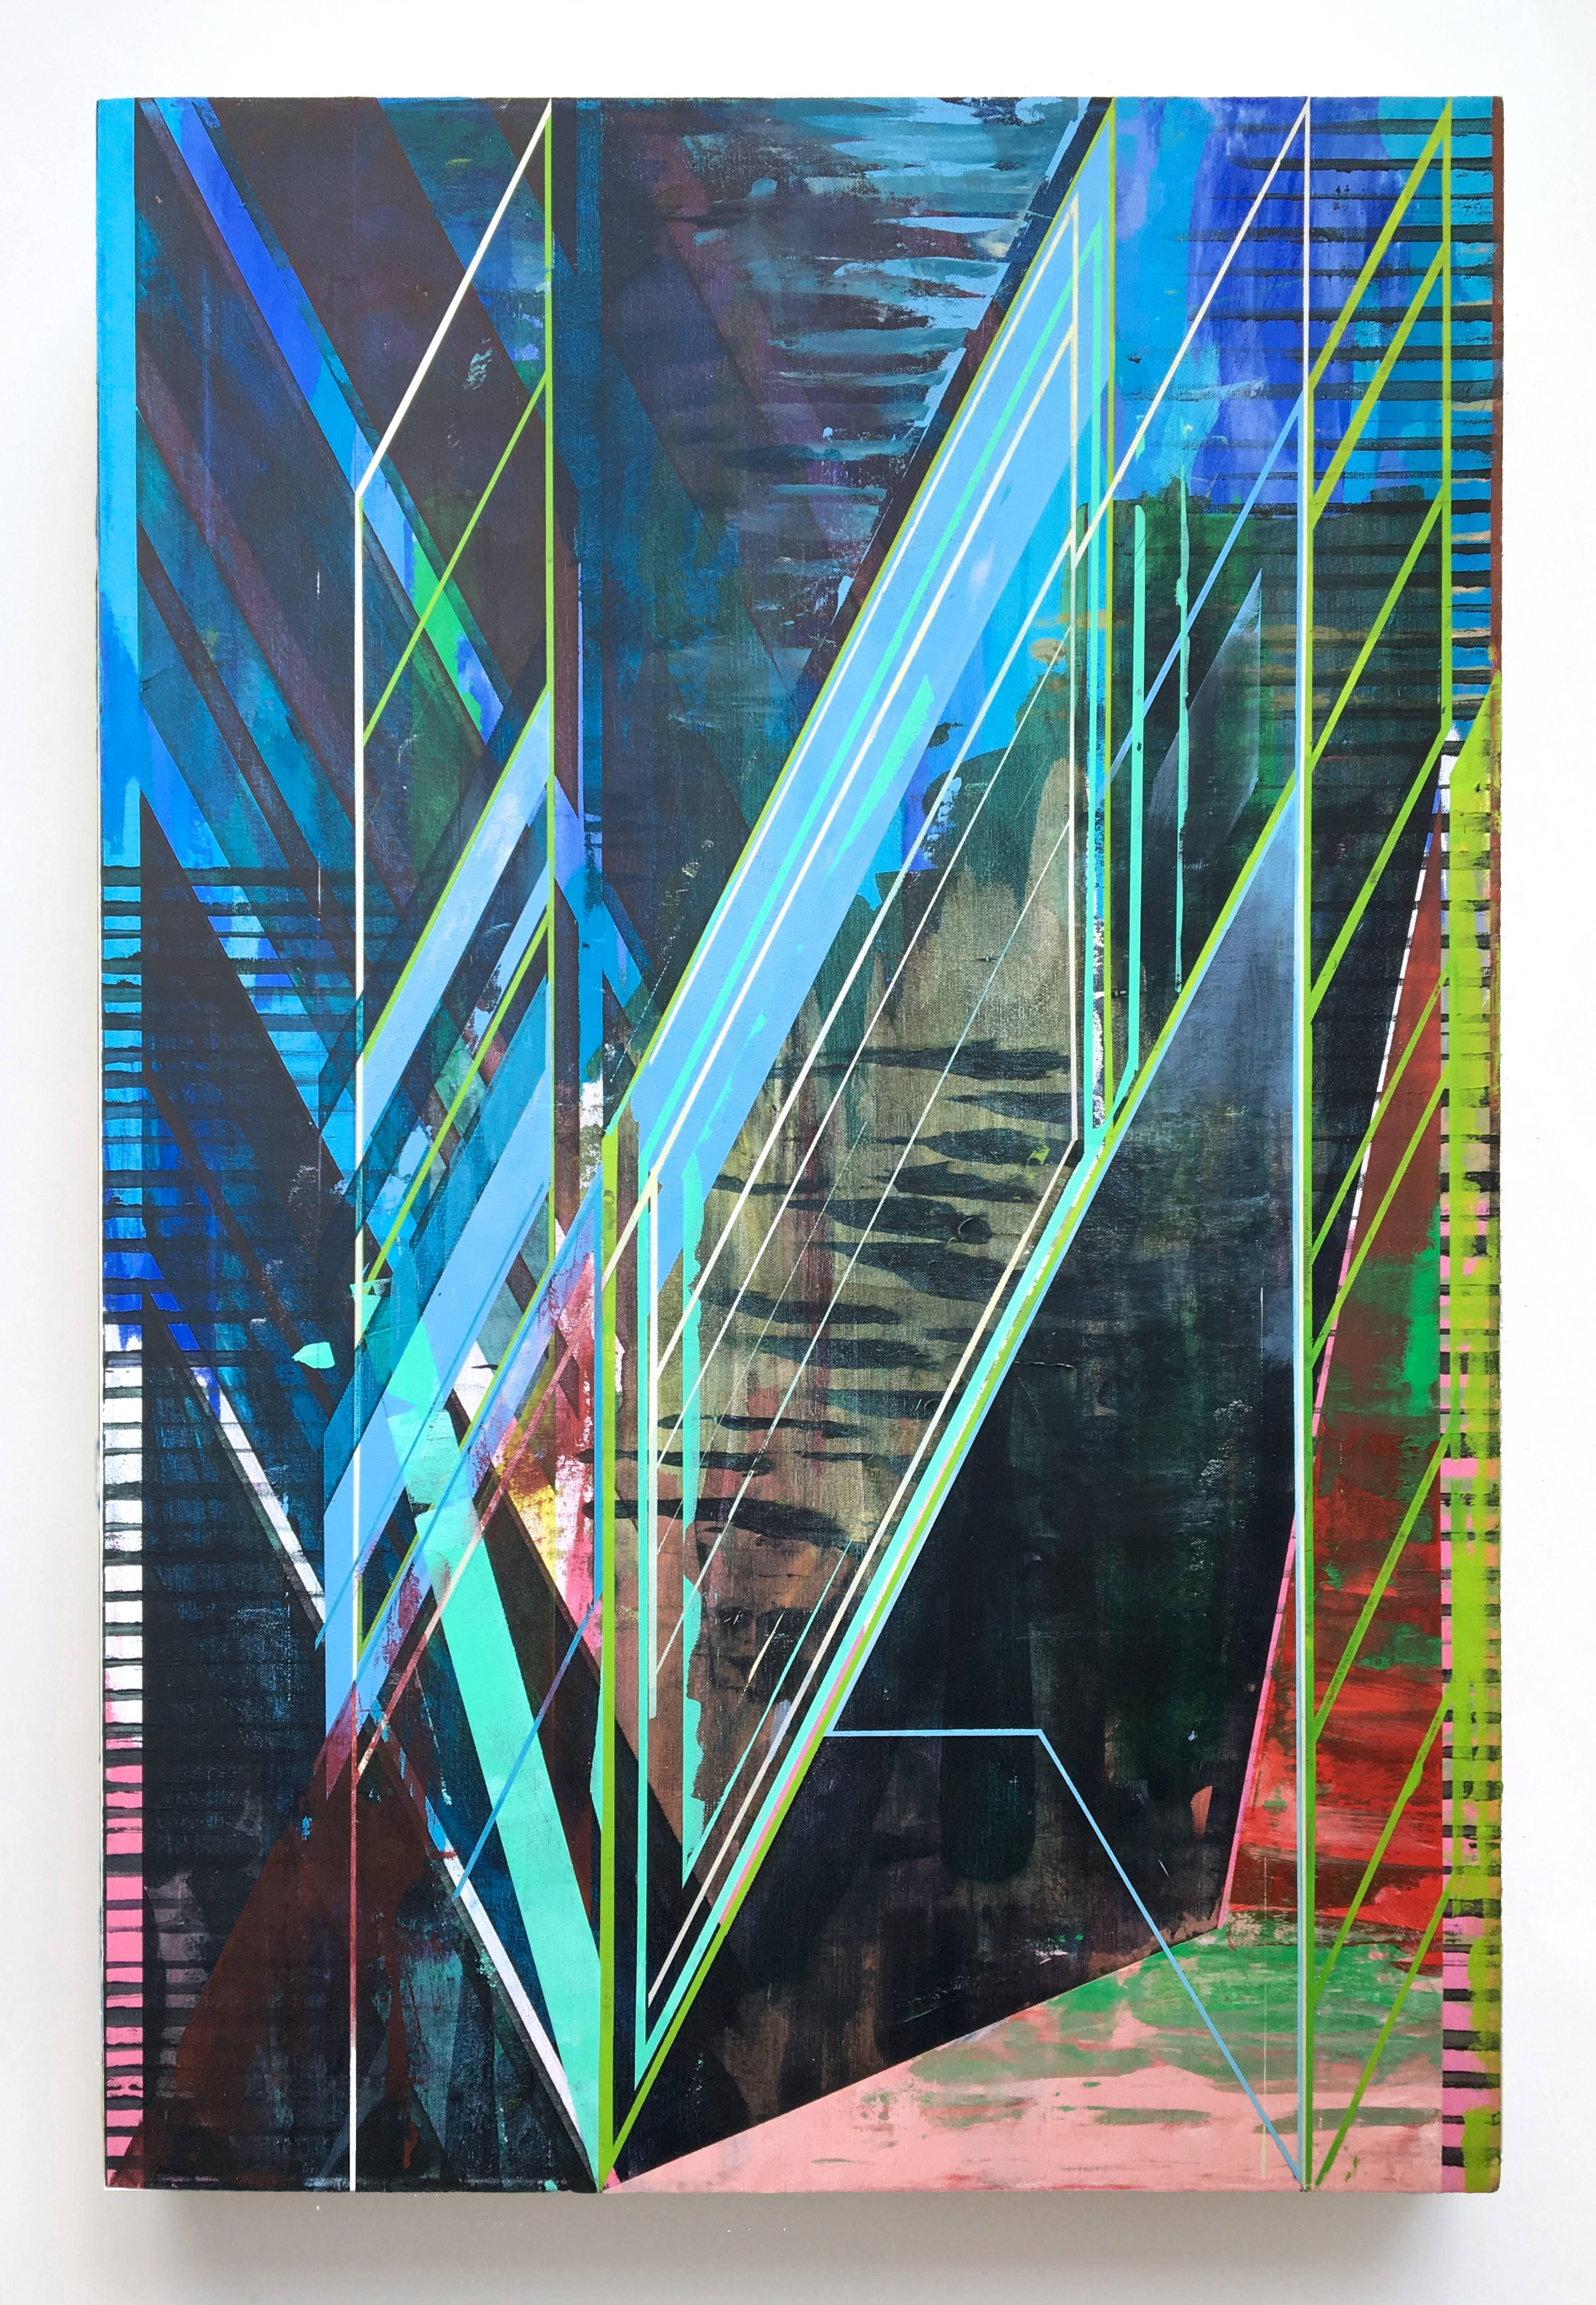 Joe Lloyd Abstract Painting - Joe lloyd, Span, 2016, acrylic on canvas, geometric abstract painting, 41x28in.